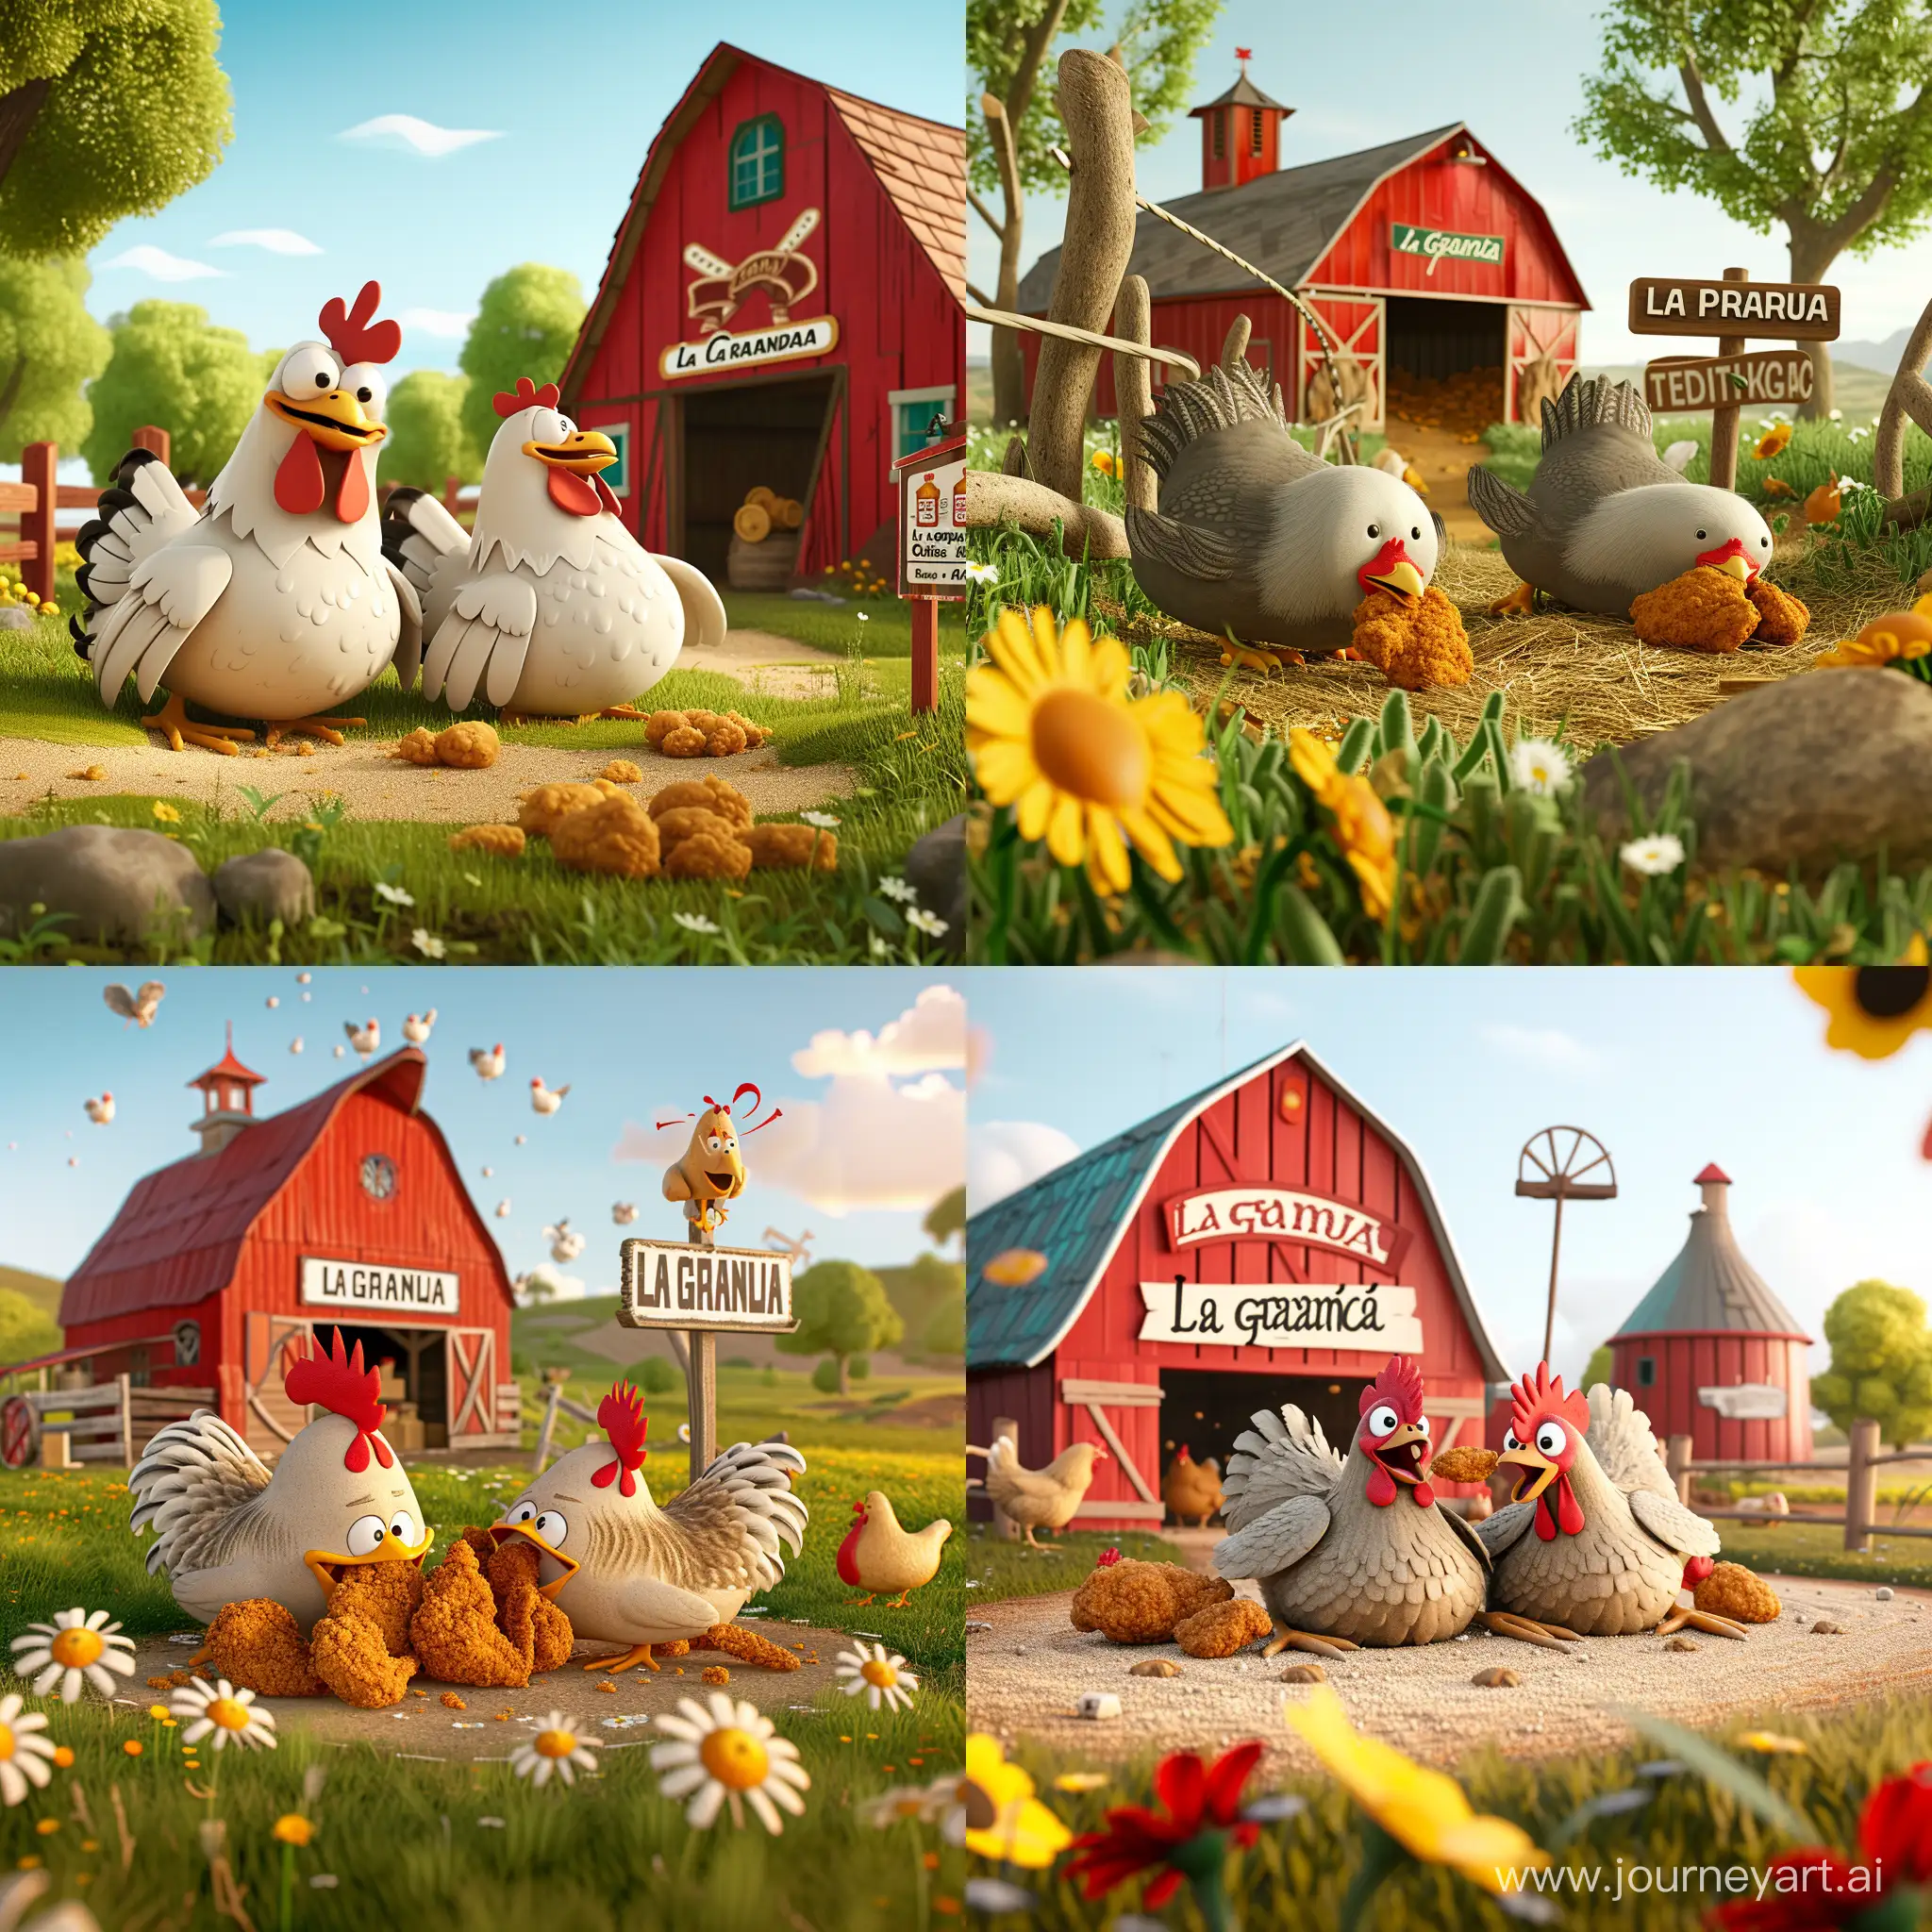 Whimsical-Farm-Scene-Animated-3D-Chickens-Enjoying-Fried-Chicken-at-La-Granja